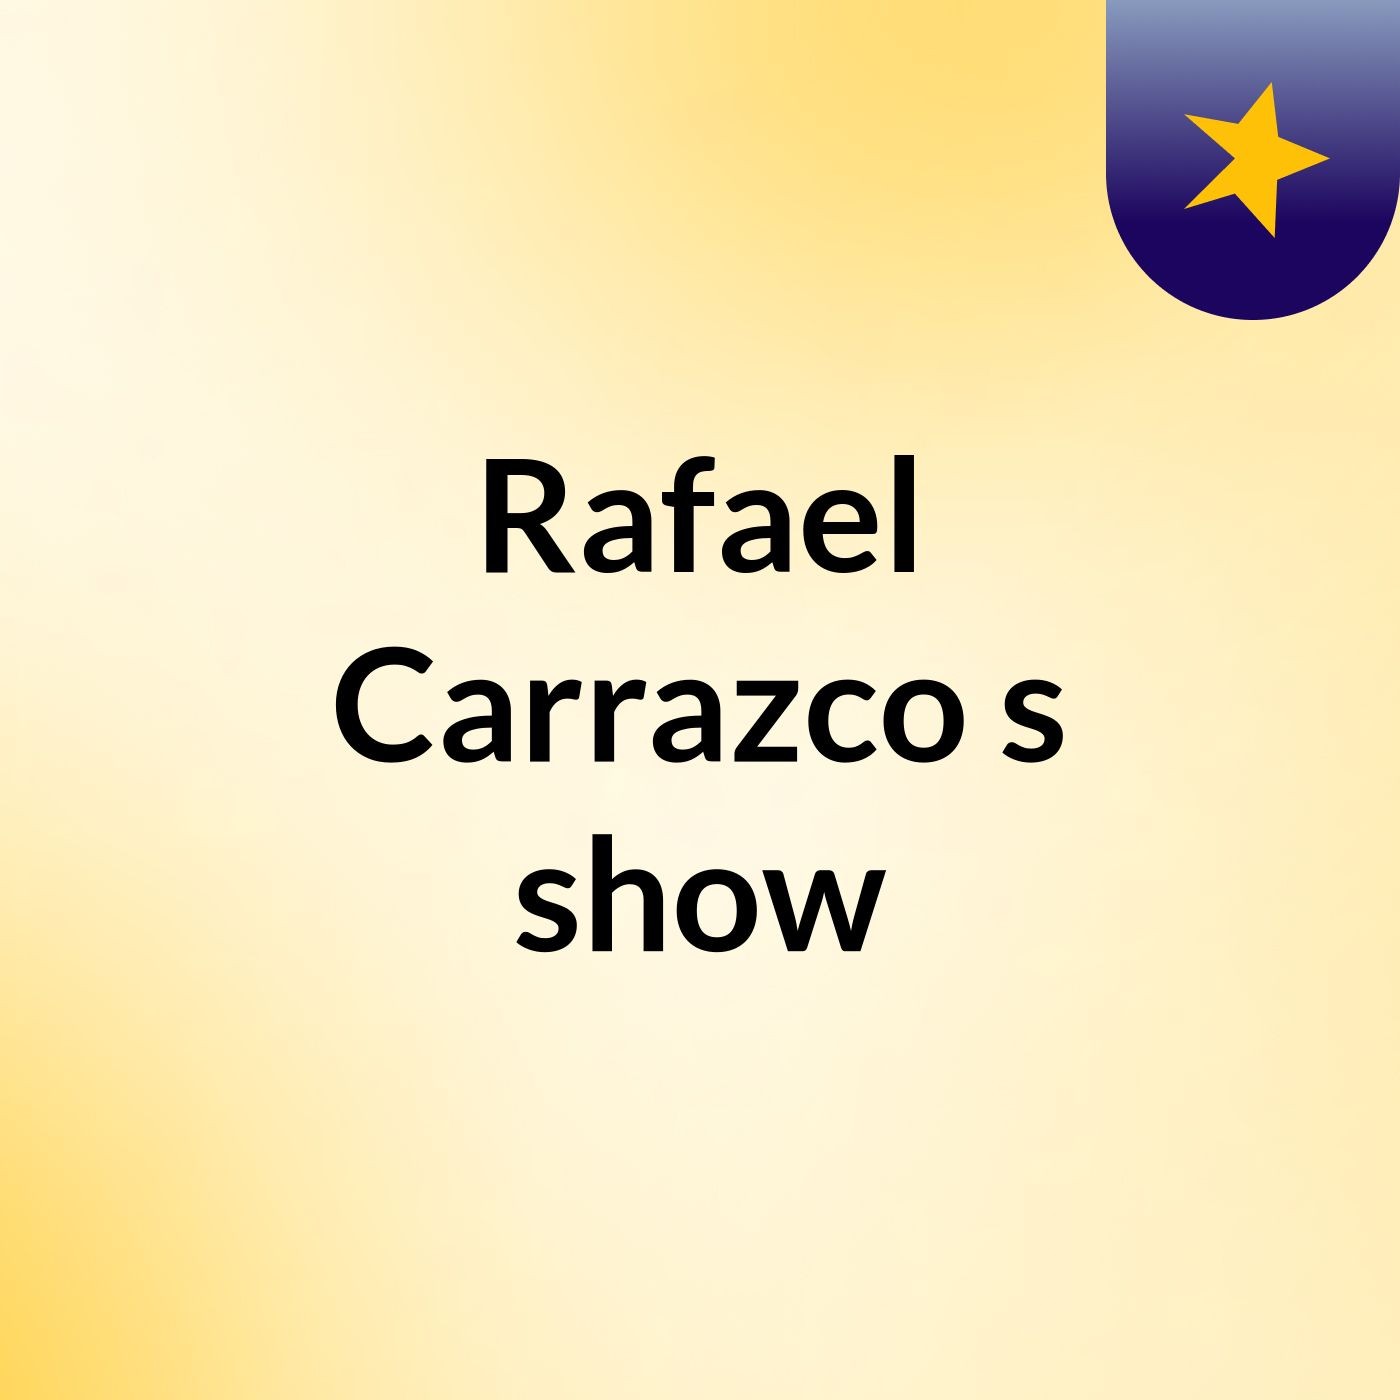 Rafael Carrazco's show